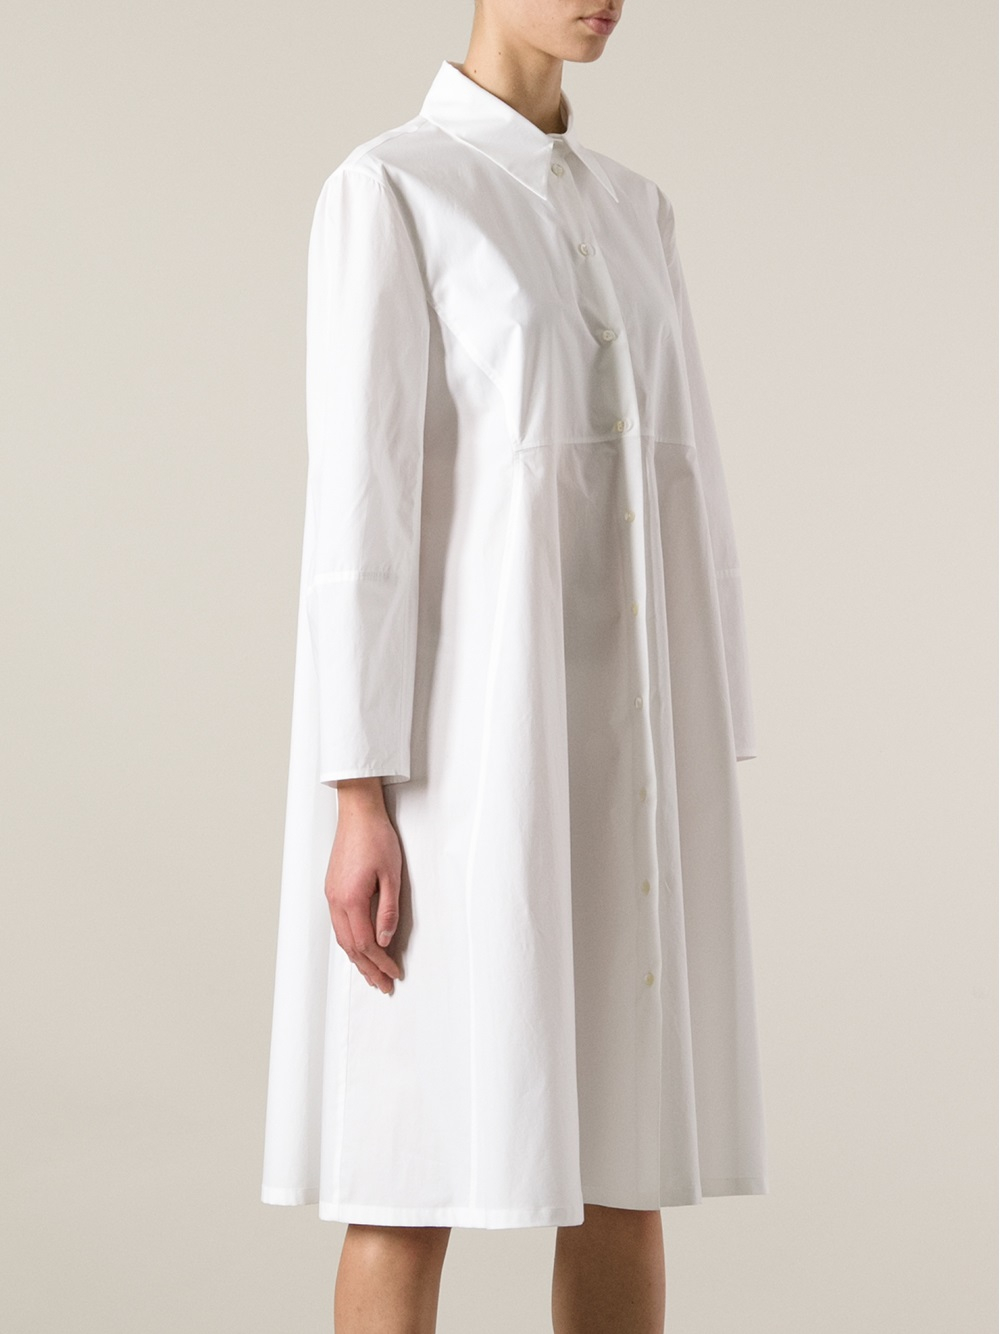 Lyst - Antonio marras Long Sleeve Shirt Dress in White